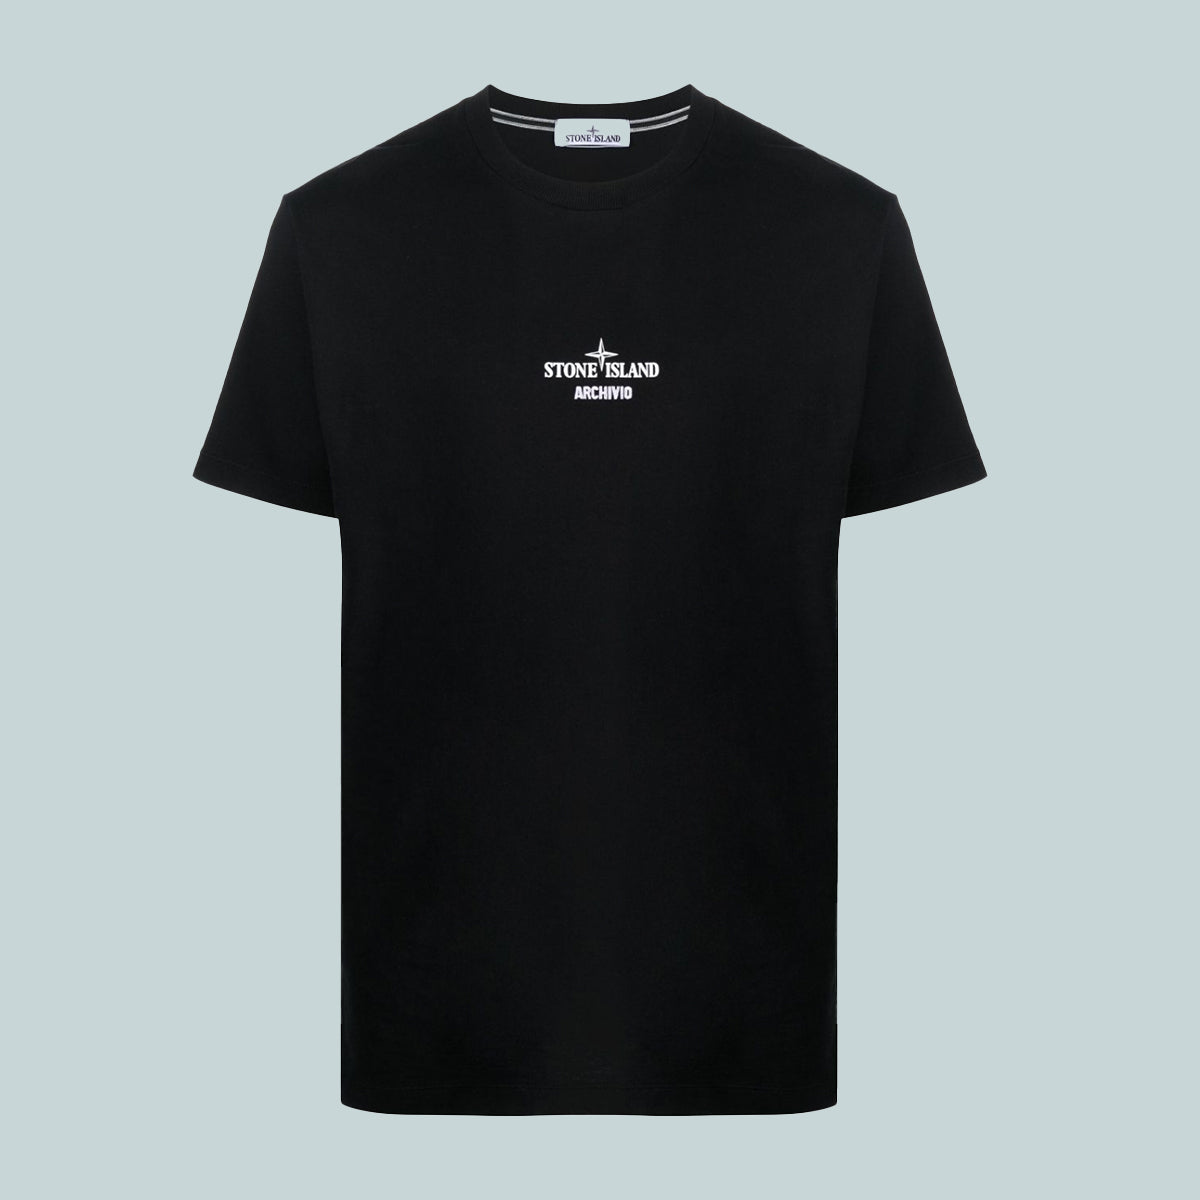 Archivio T-Shirt Black